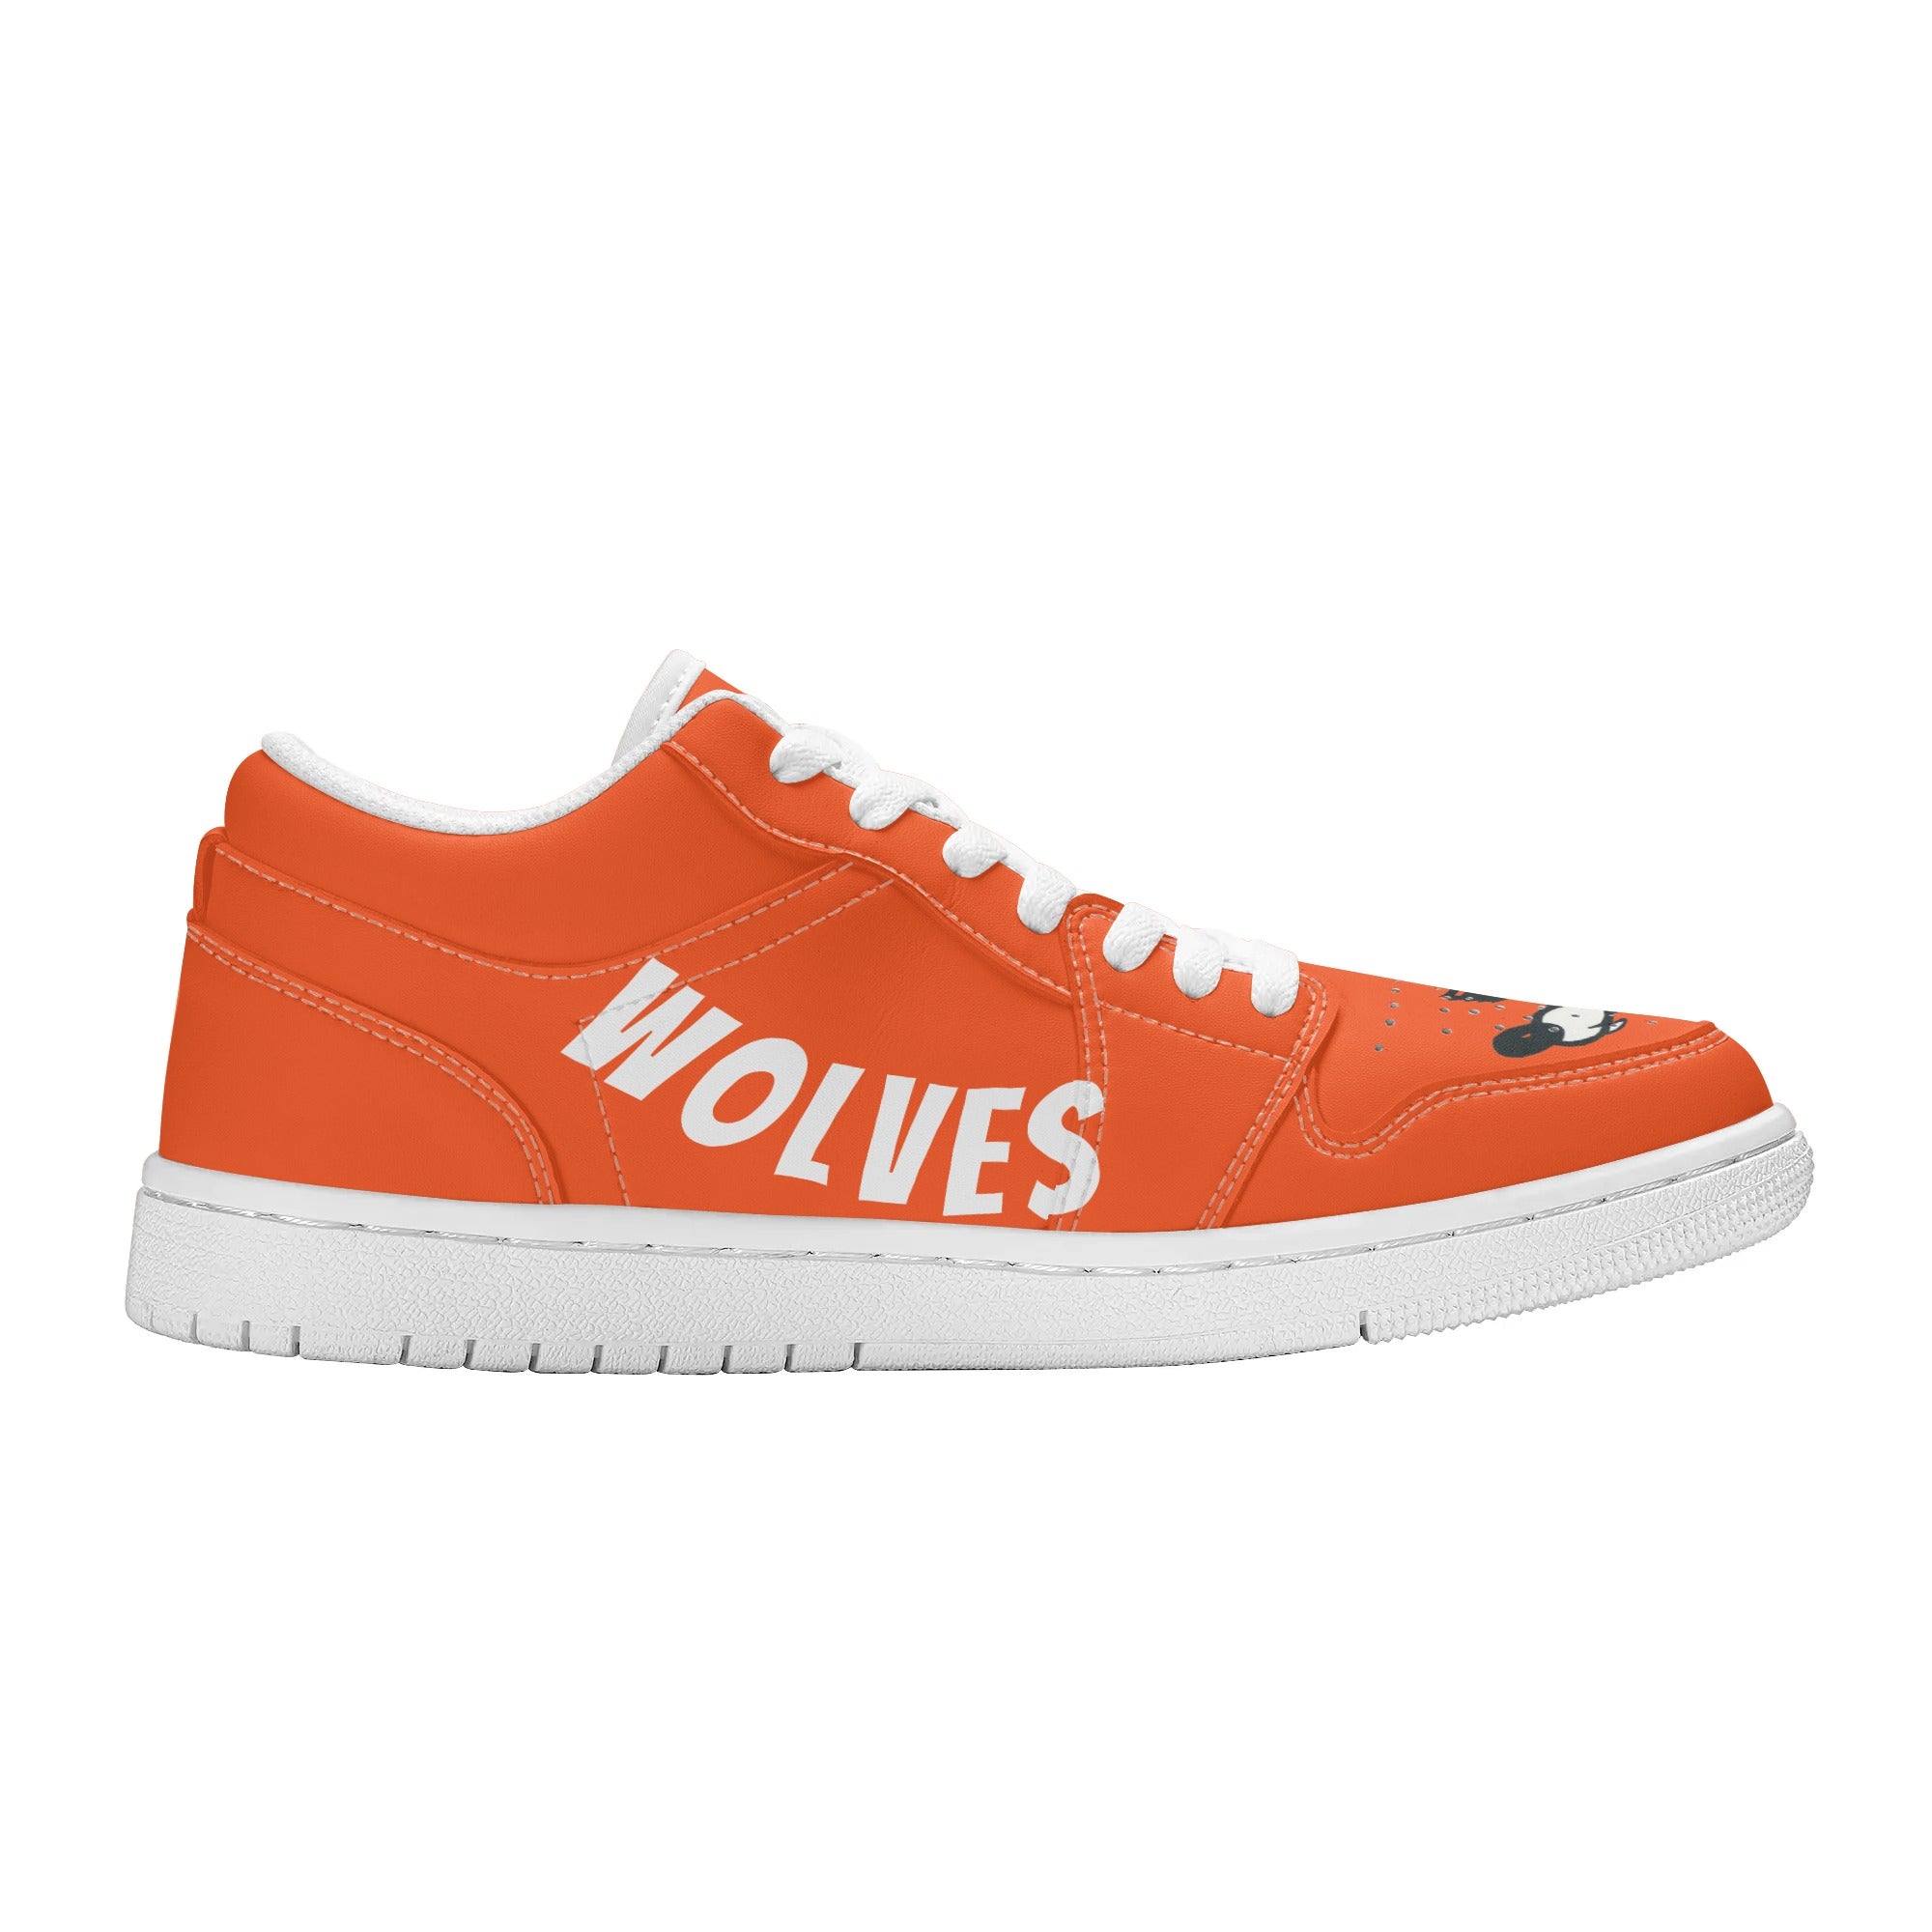 Wolves | Customized Sneakers | Shoe Zero